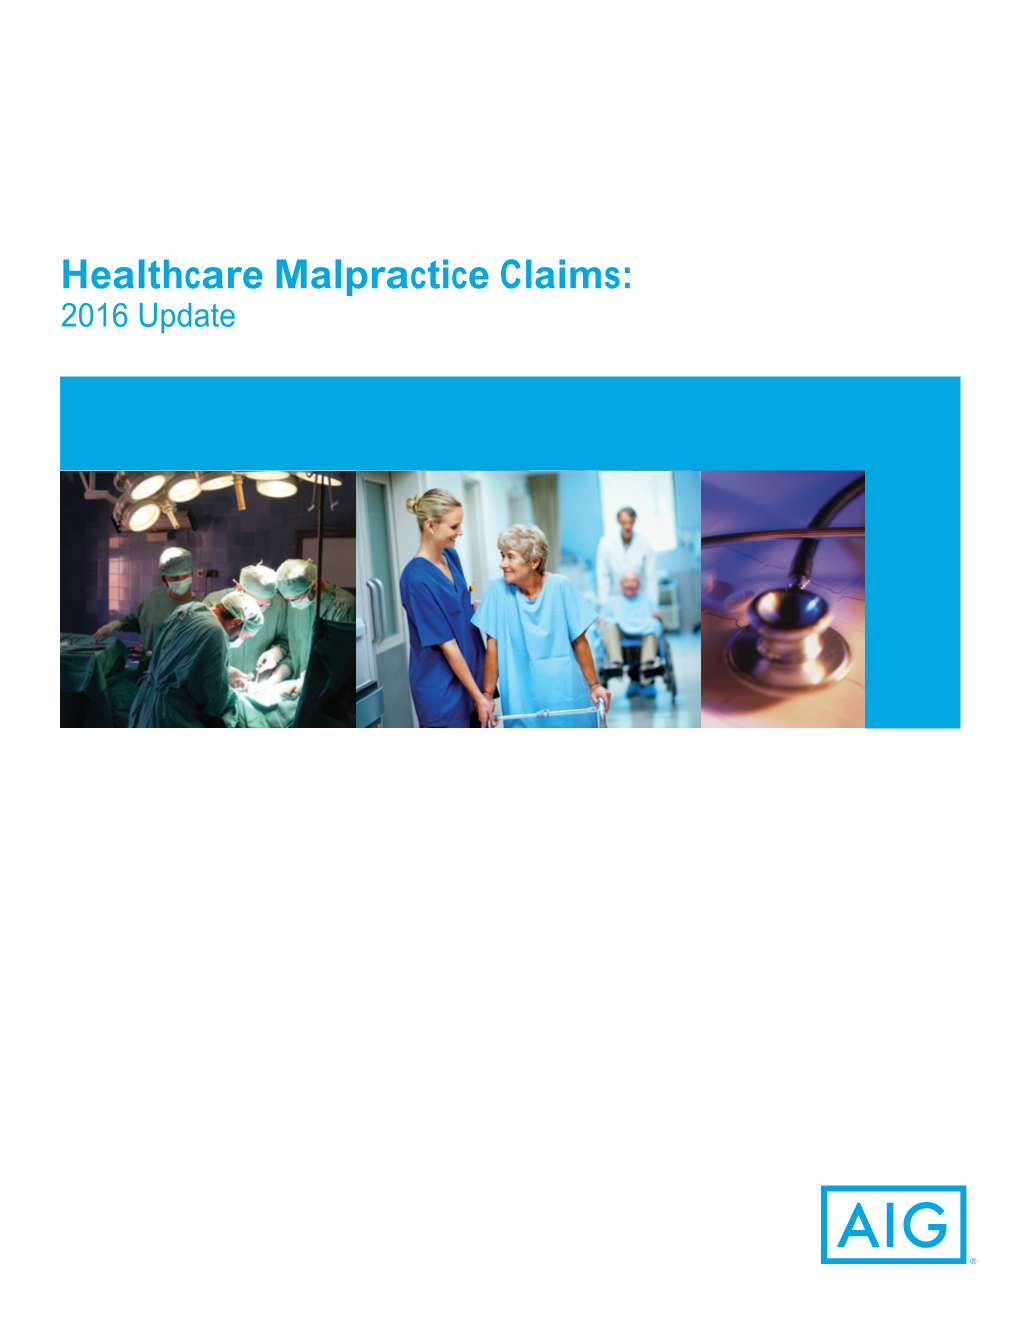 Healthcare Malpractice Claims: 2016 Update